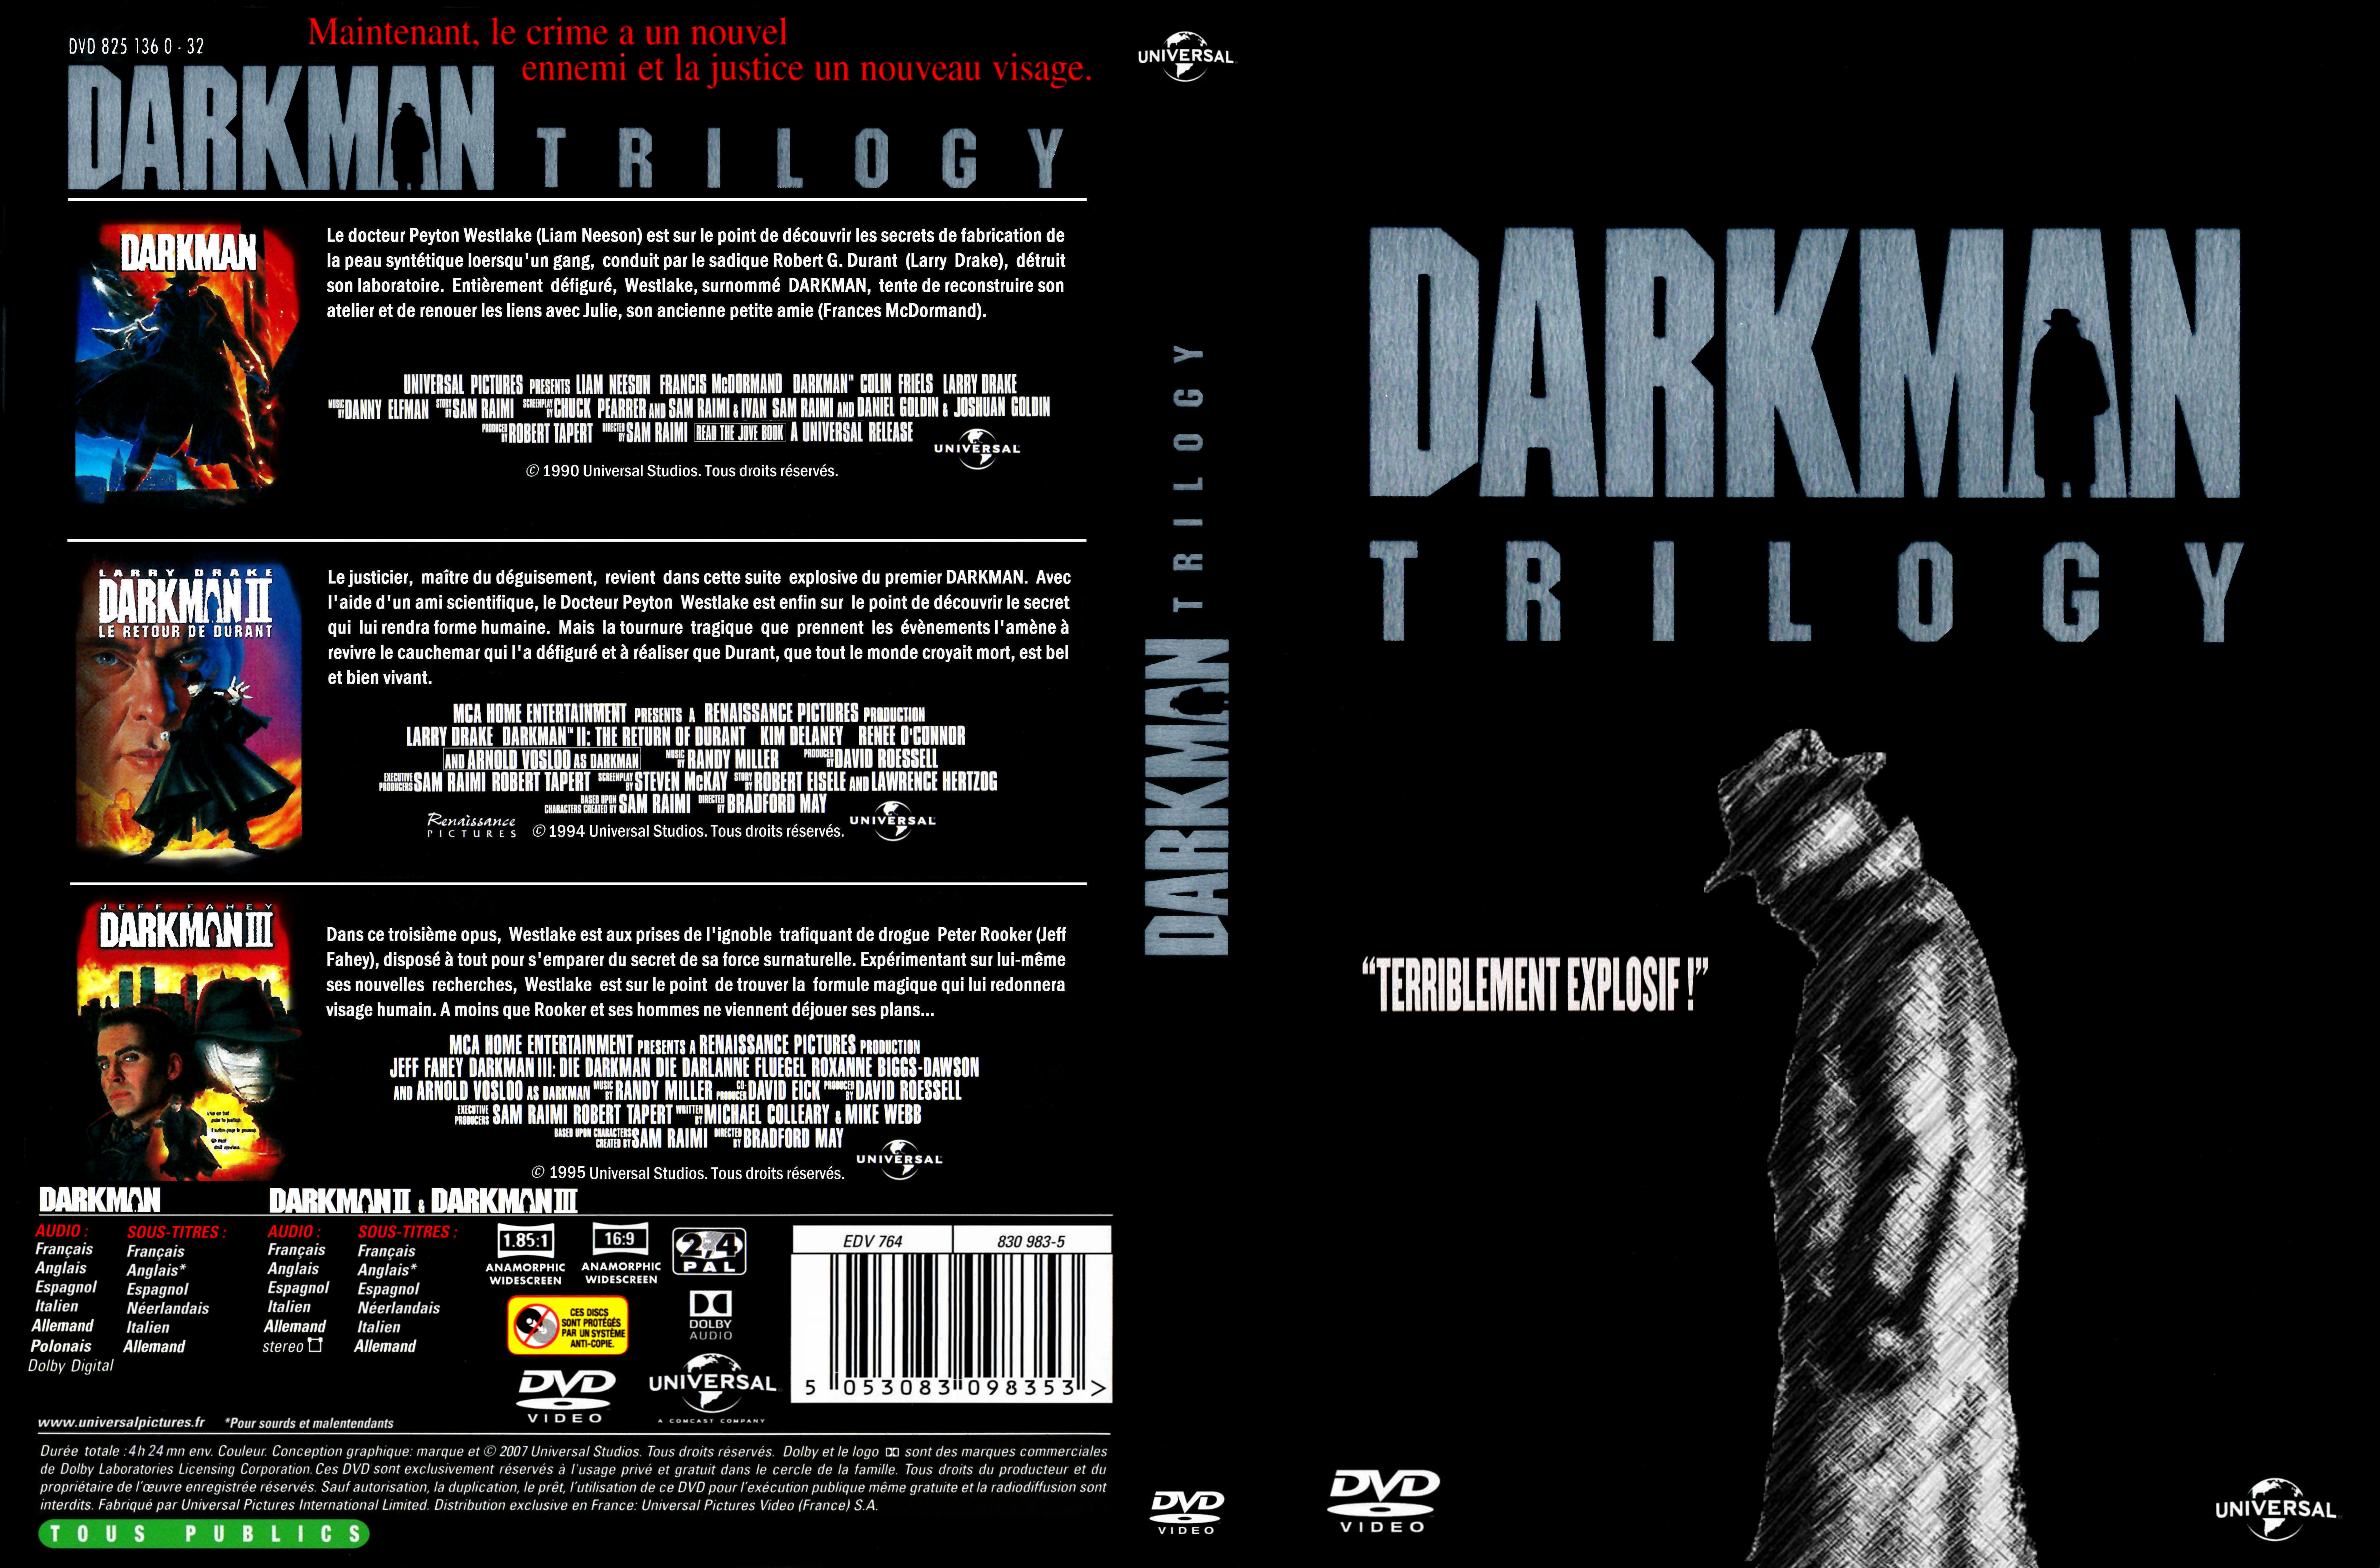 Jaquette DVD Darkman trilogy